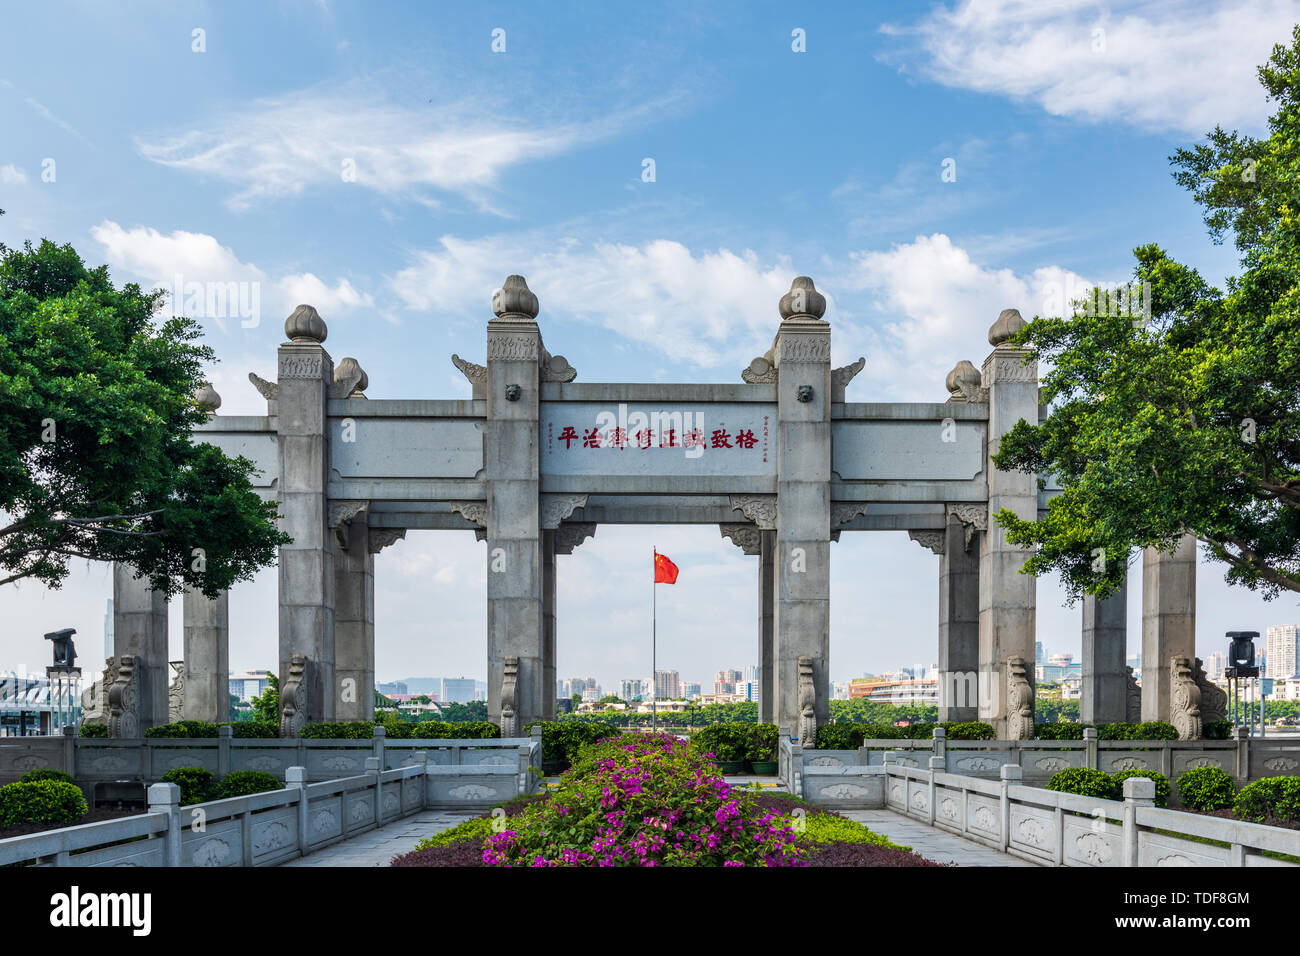 Archway of Sun Yat-sen University, Guangzhou Stock Photo